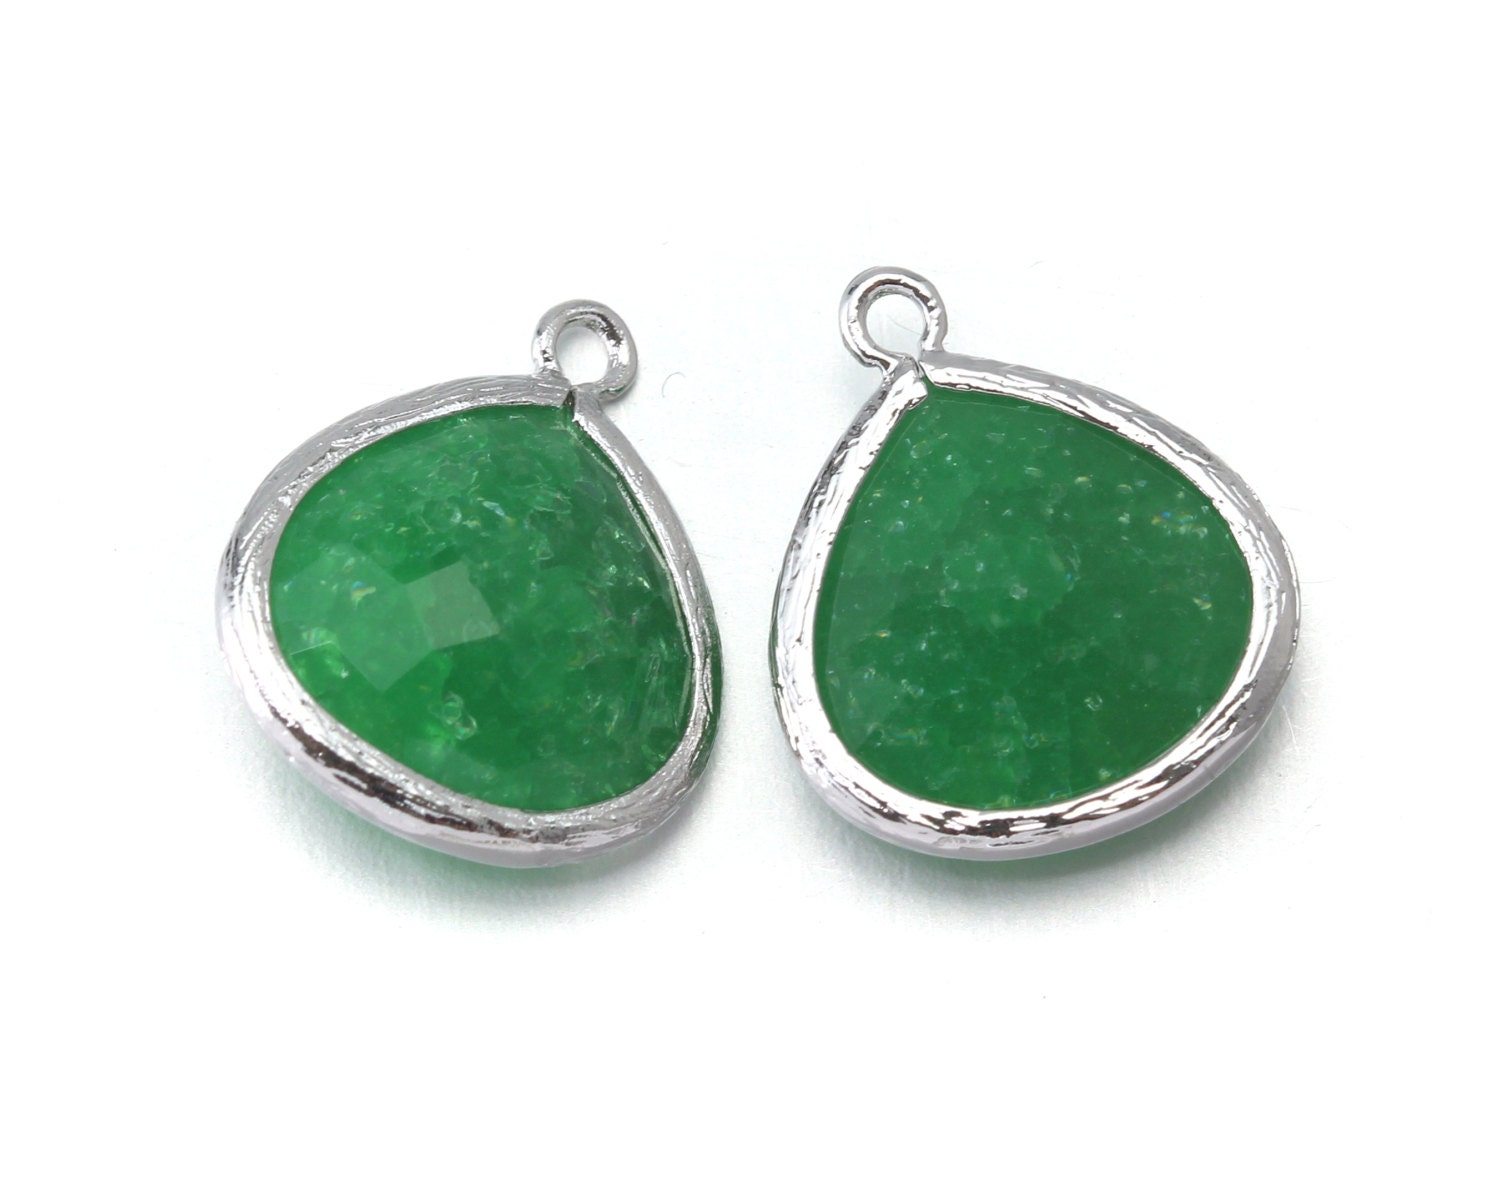 Palace Green Glass Pendant . Rock Crystal Version . Polished | Etsy